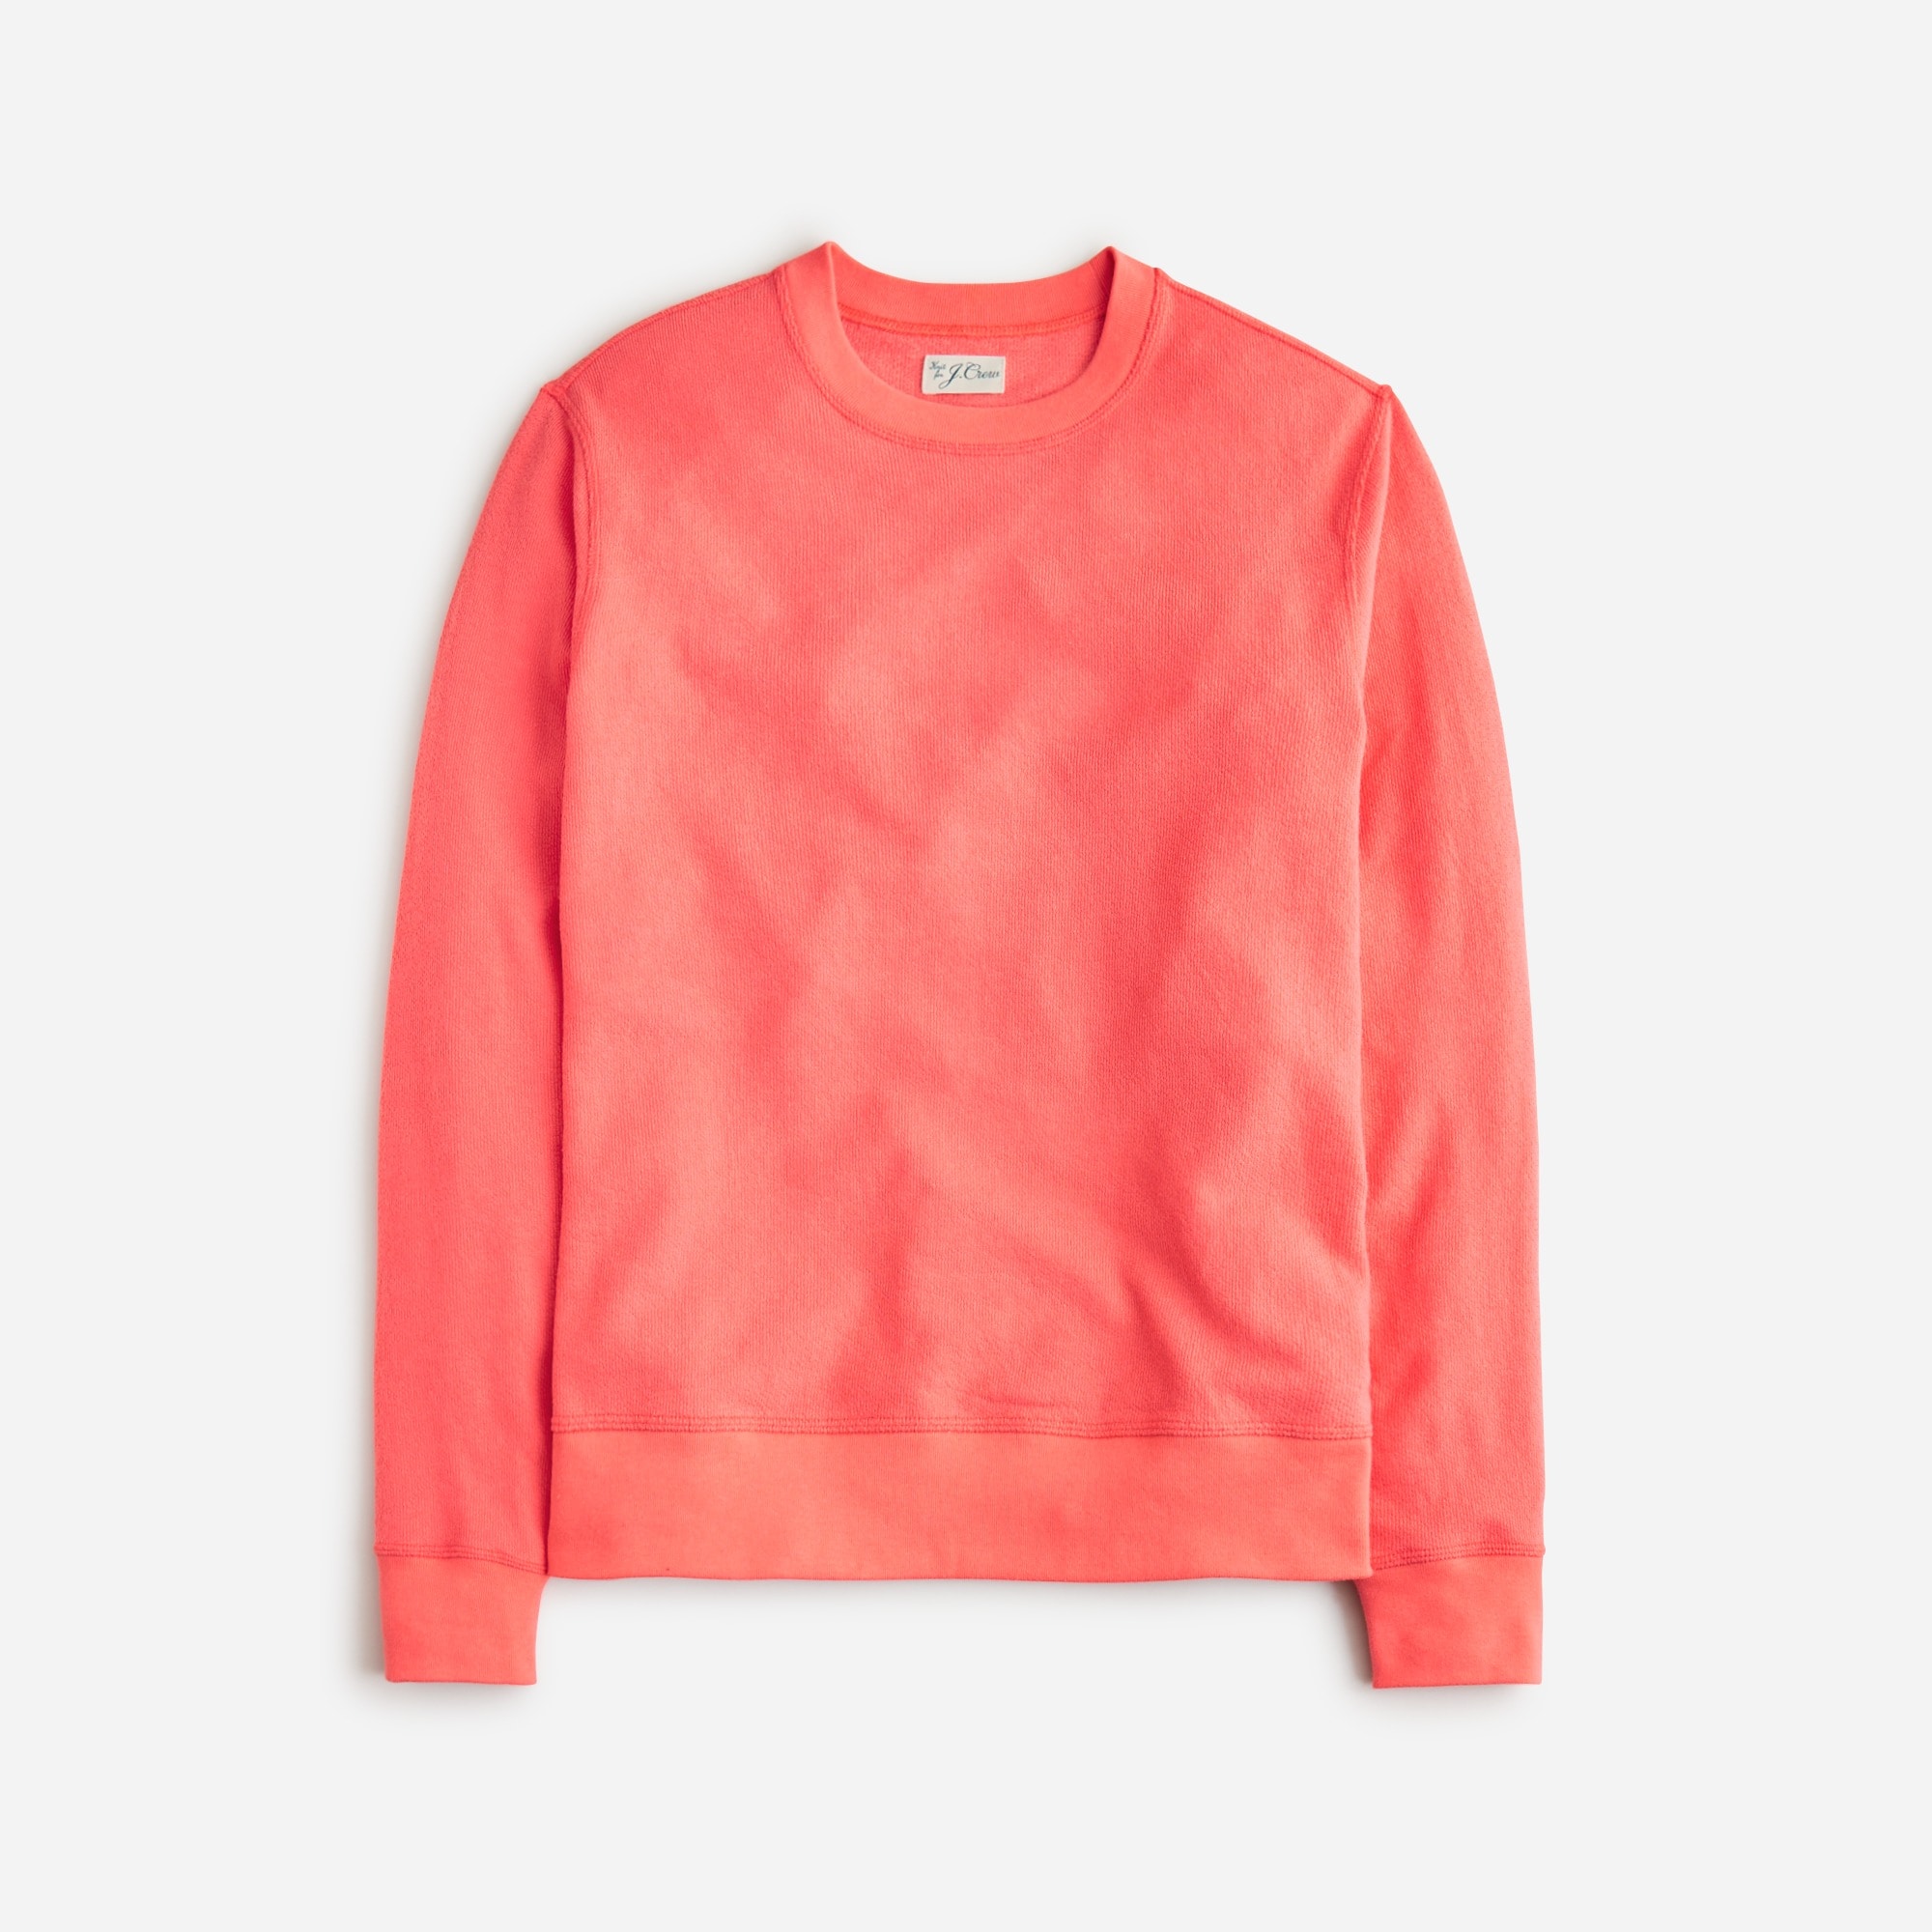  Long-sleeve textured sweater-tee